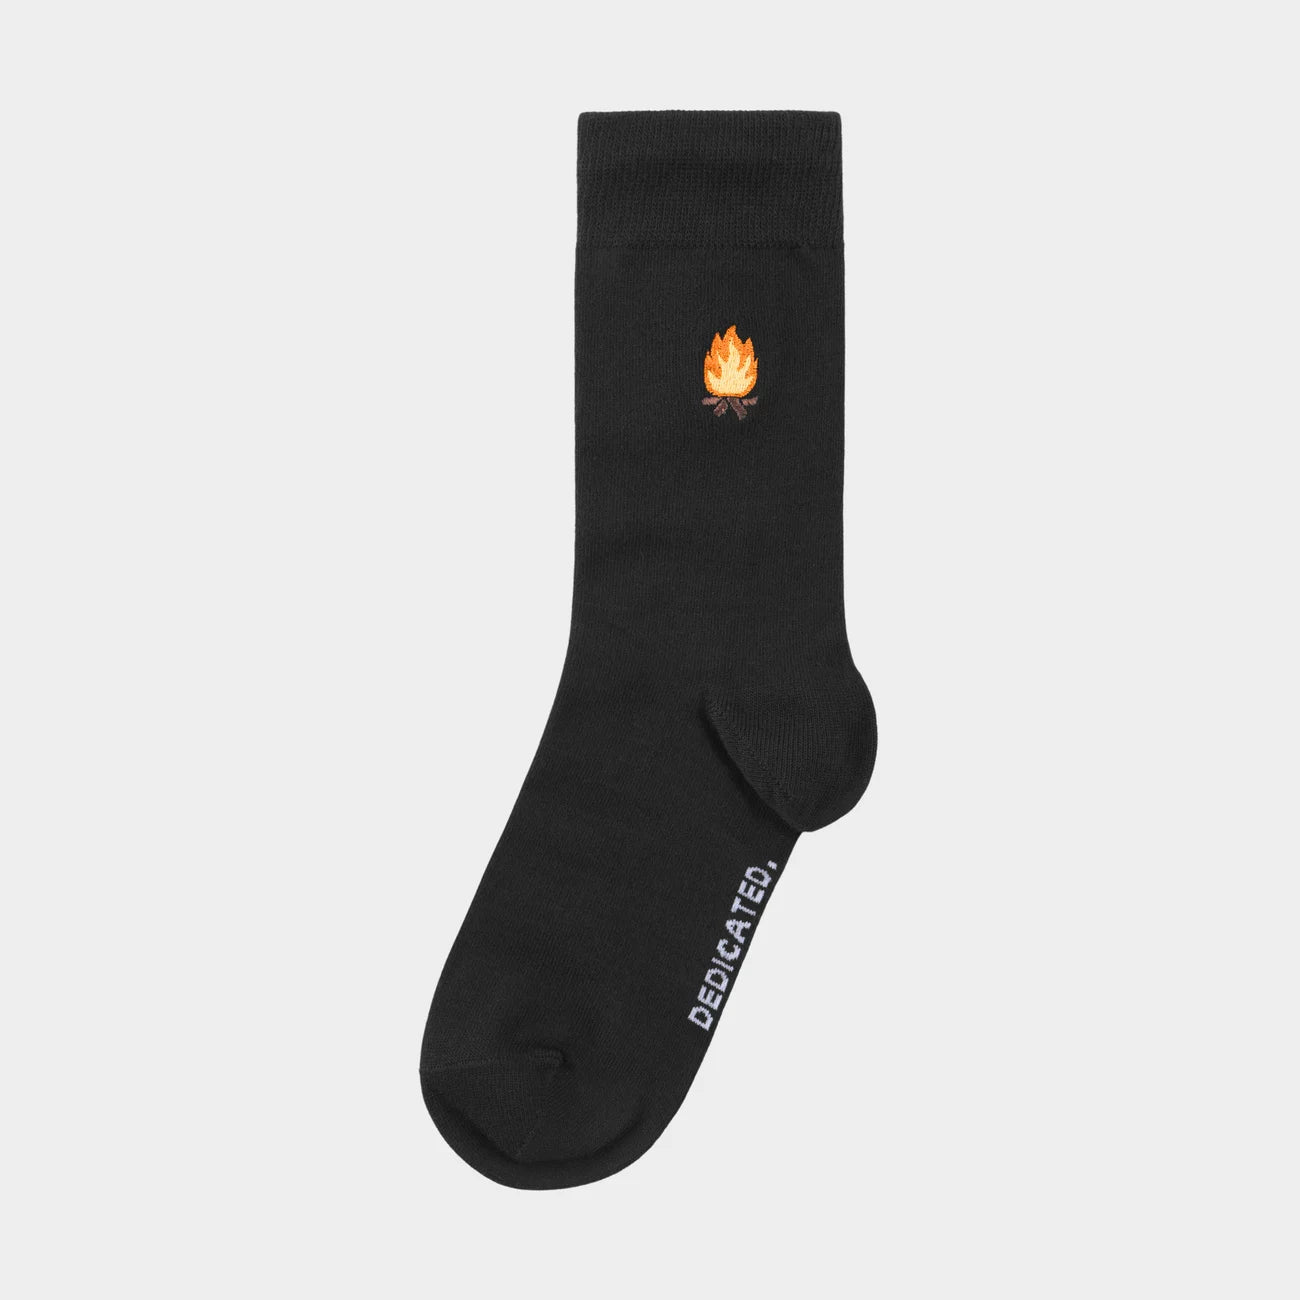 Socks Sigtuna Camp Fire - Black